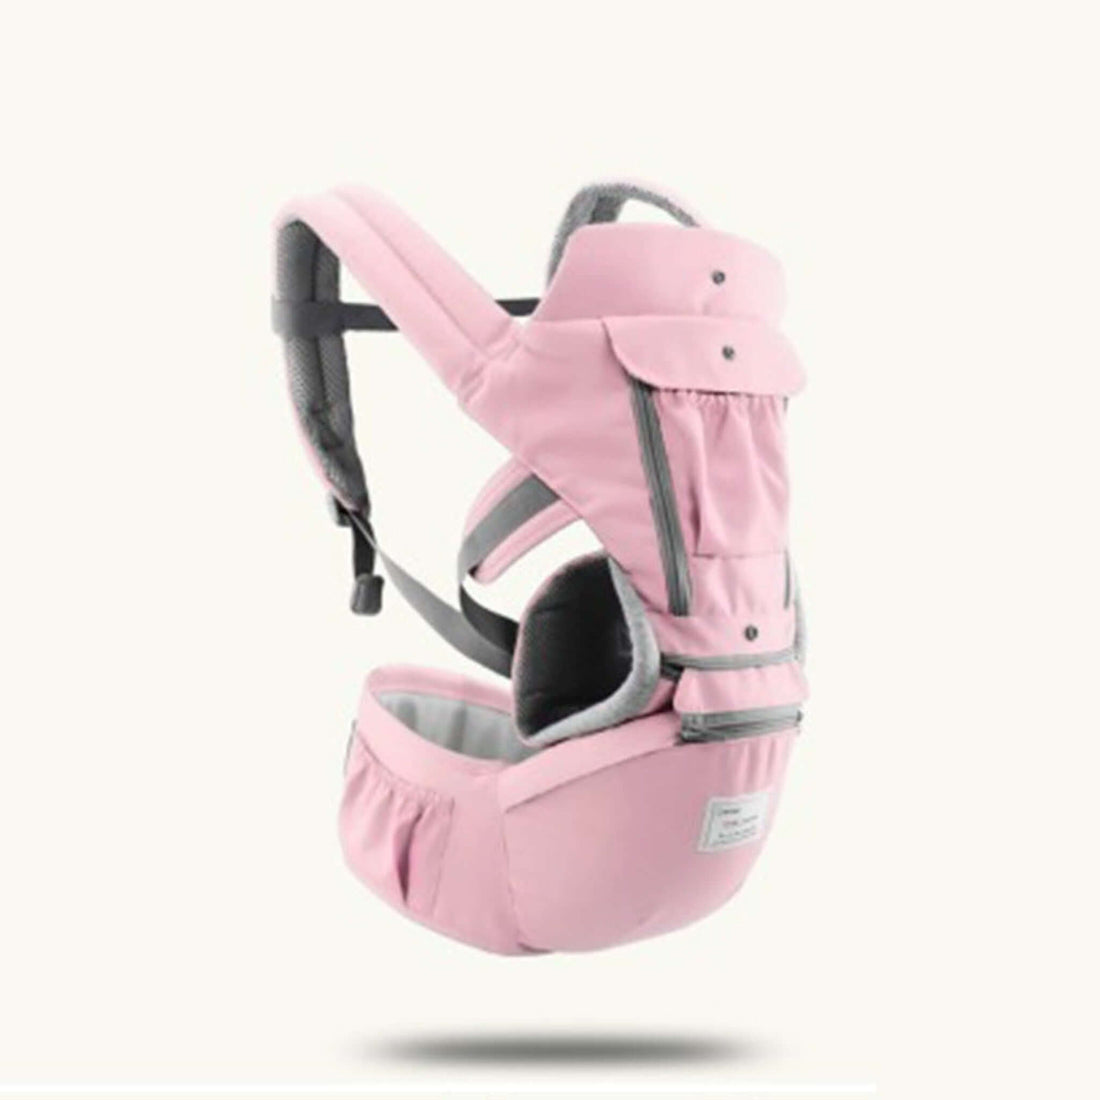 Pink baby waist stool with storage pocket